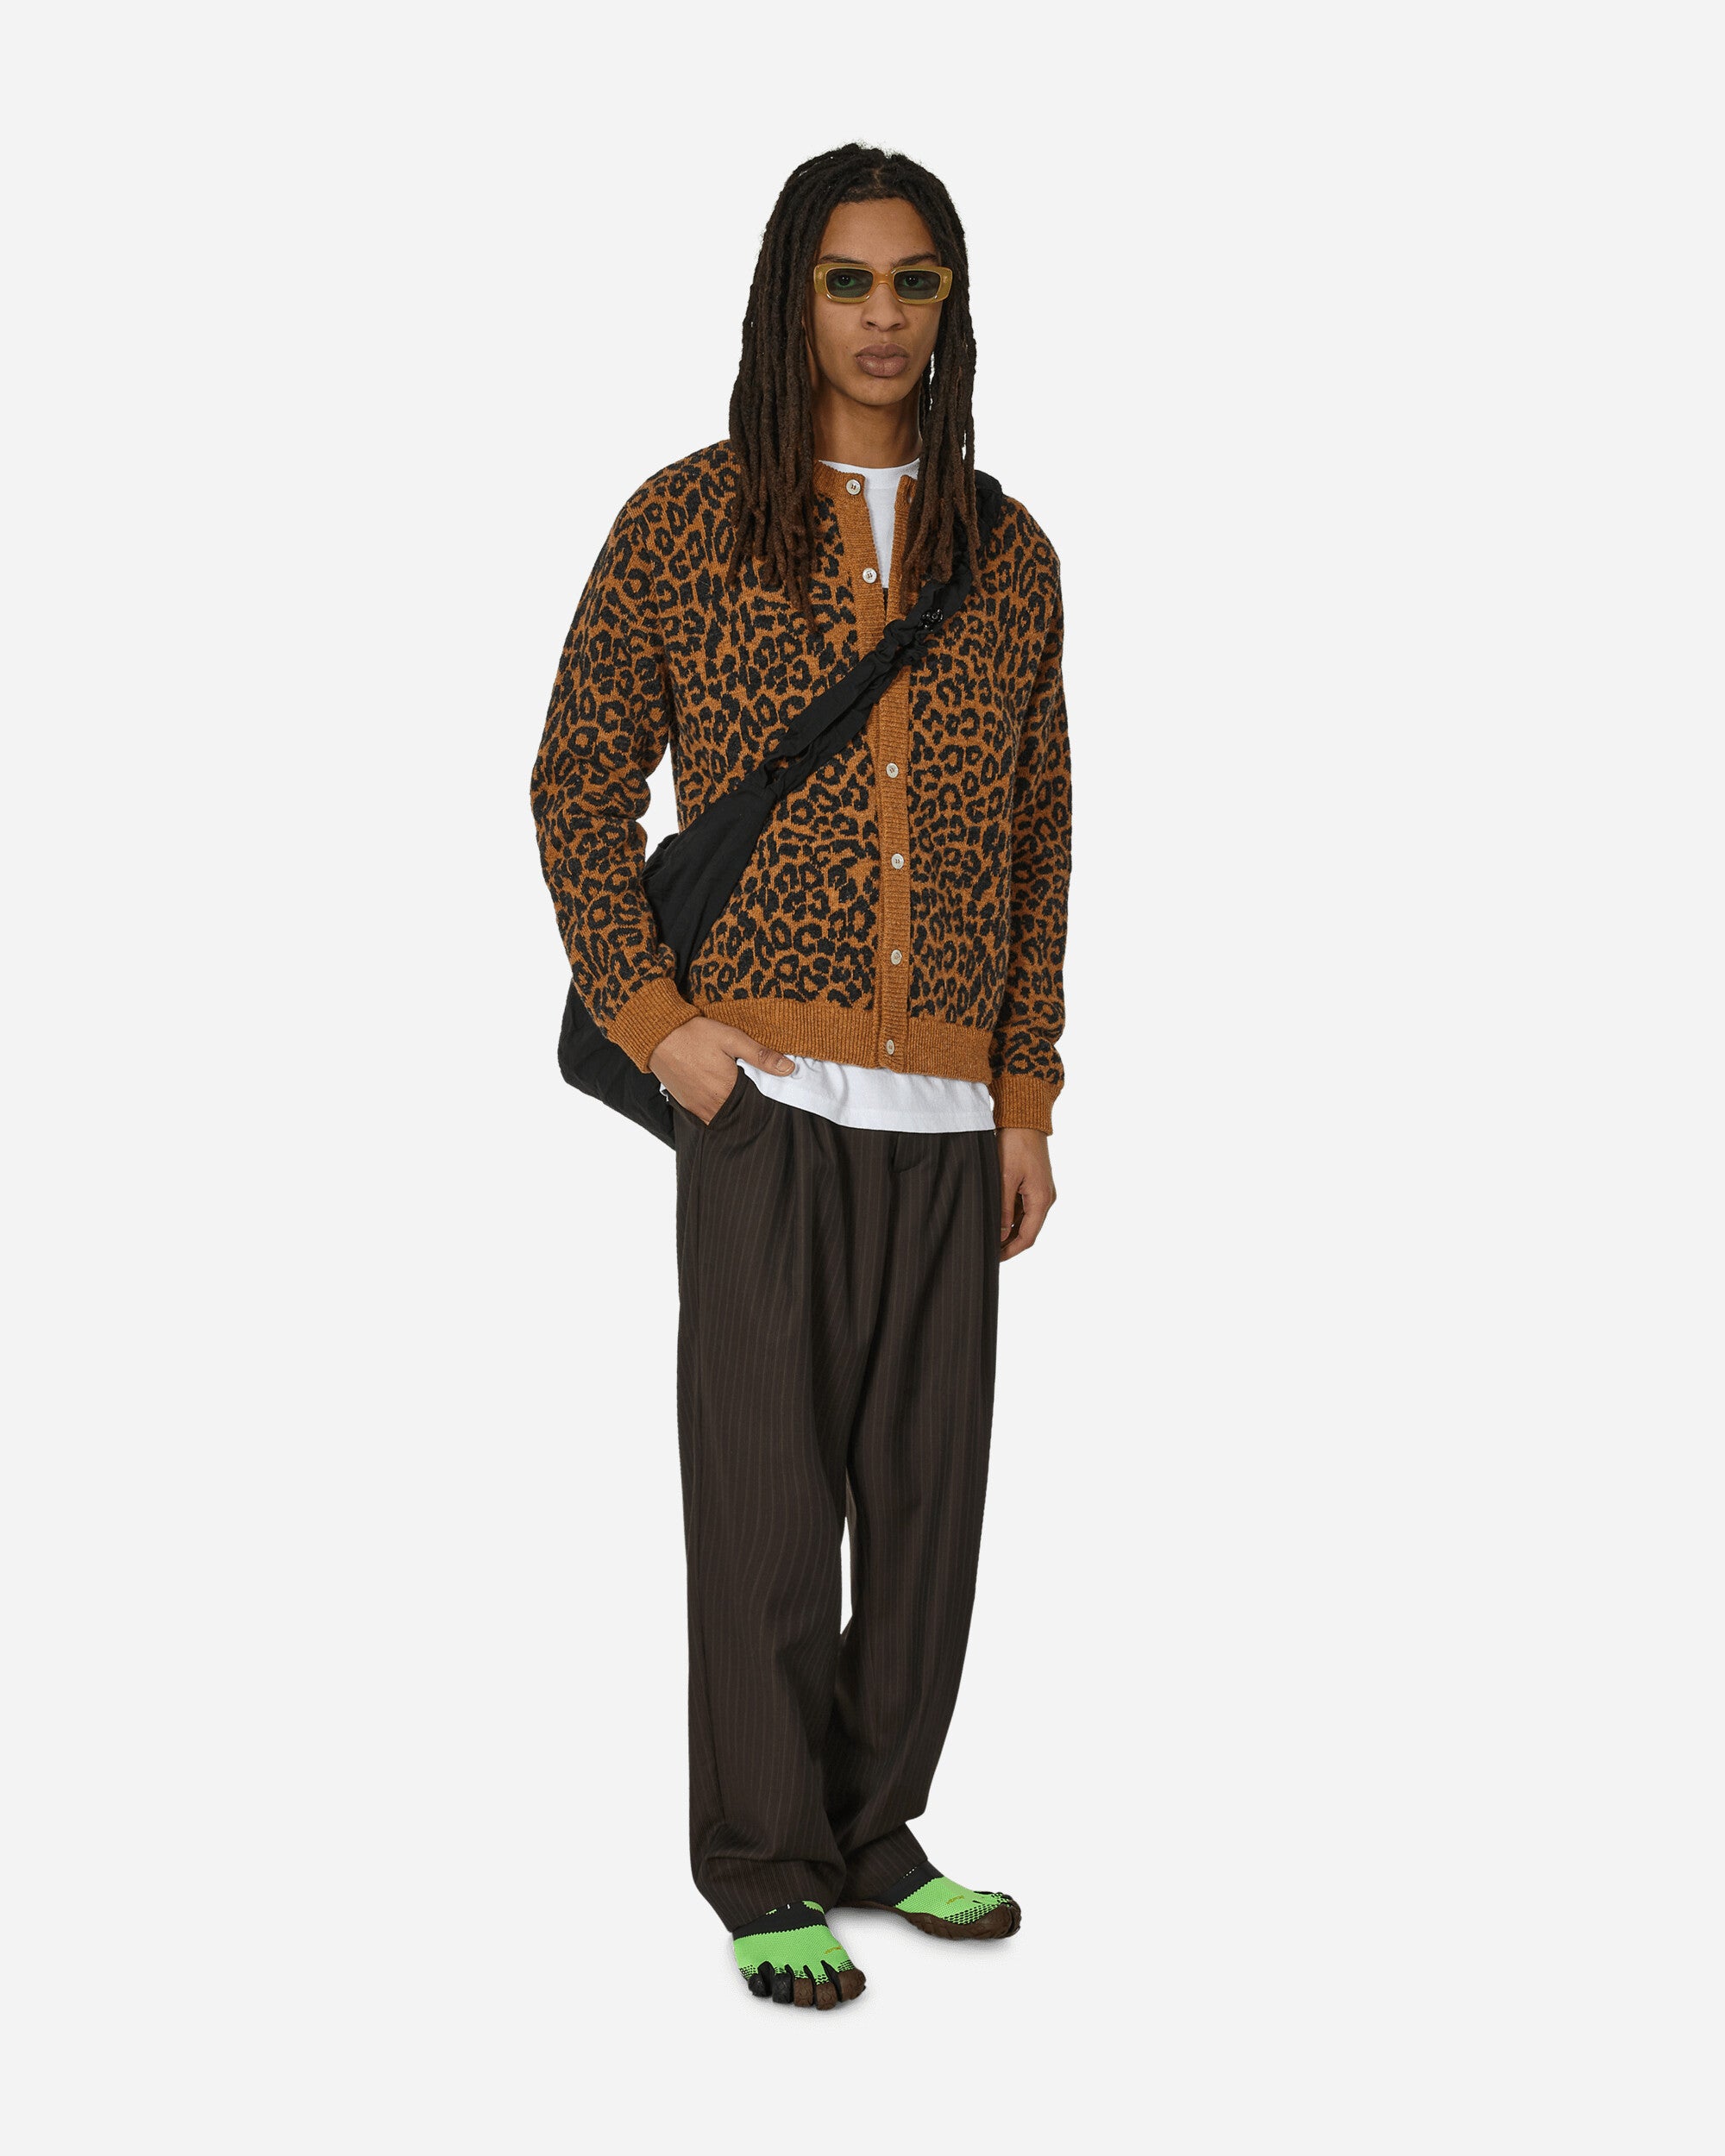 Leopard Cardigan Sweater Brown